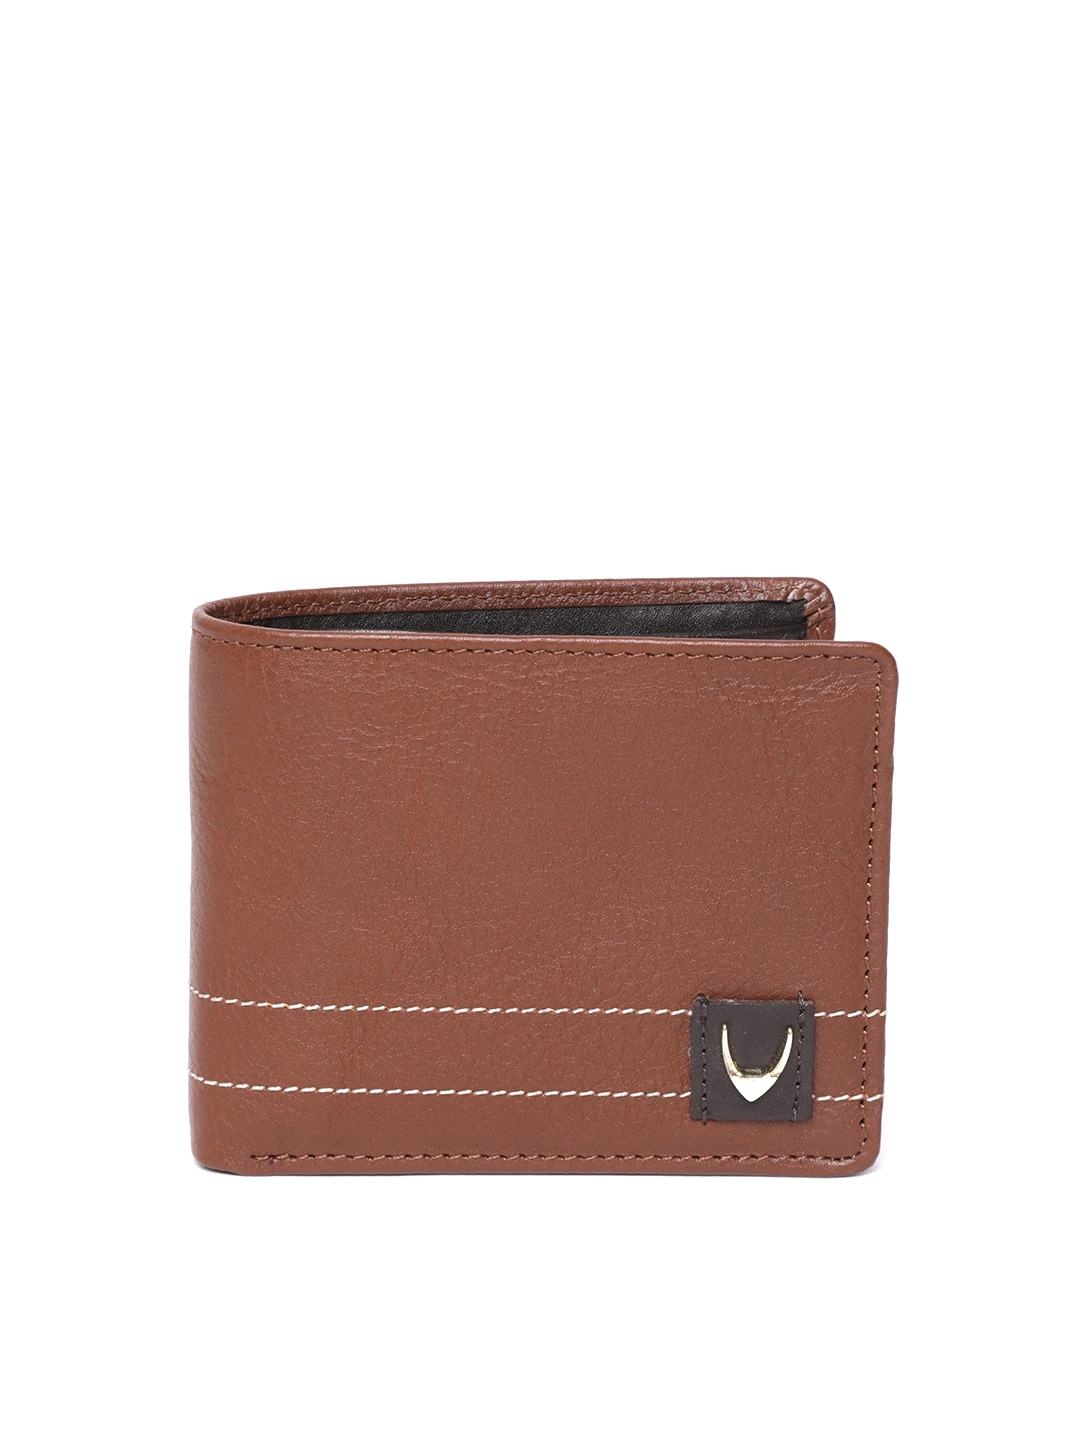 Buy Hidesign Men Brown Solid Leather Two Fold Wallet - Wallets for Men ...